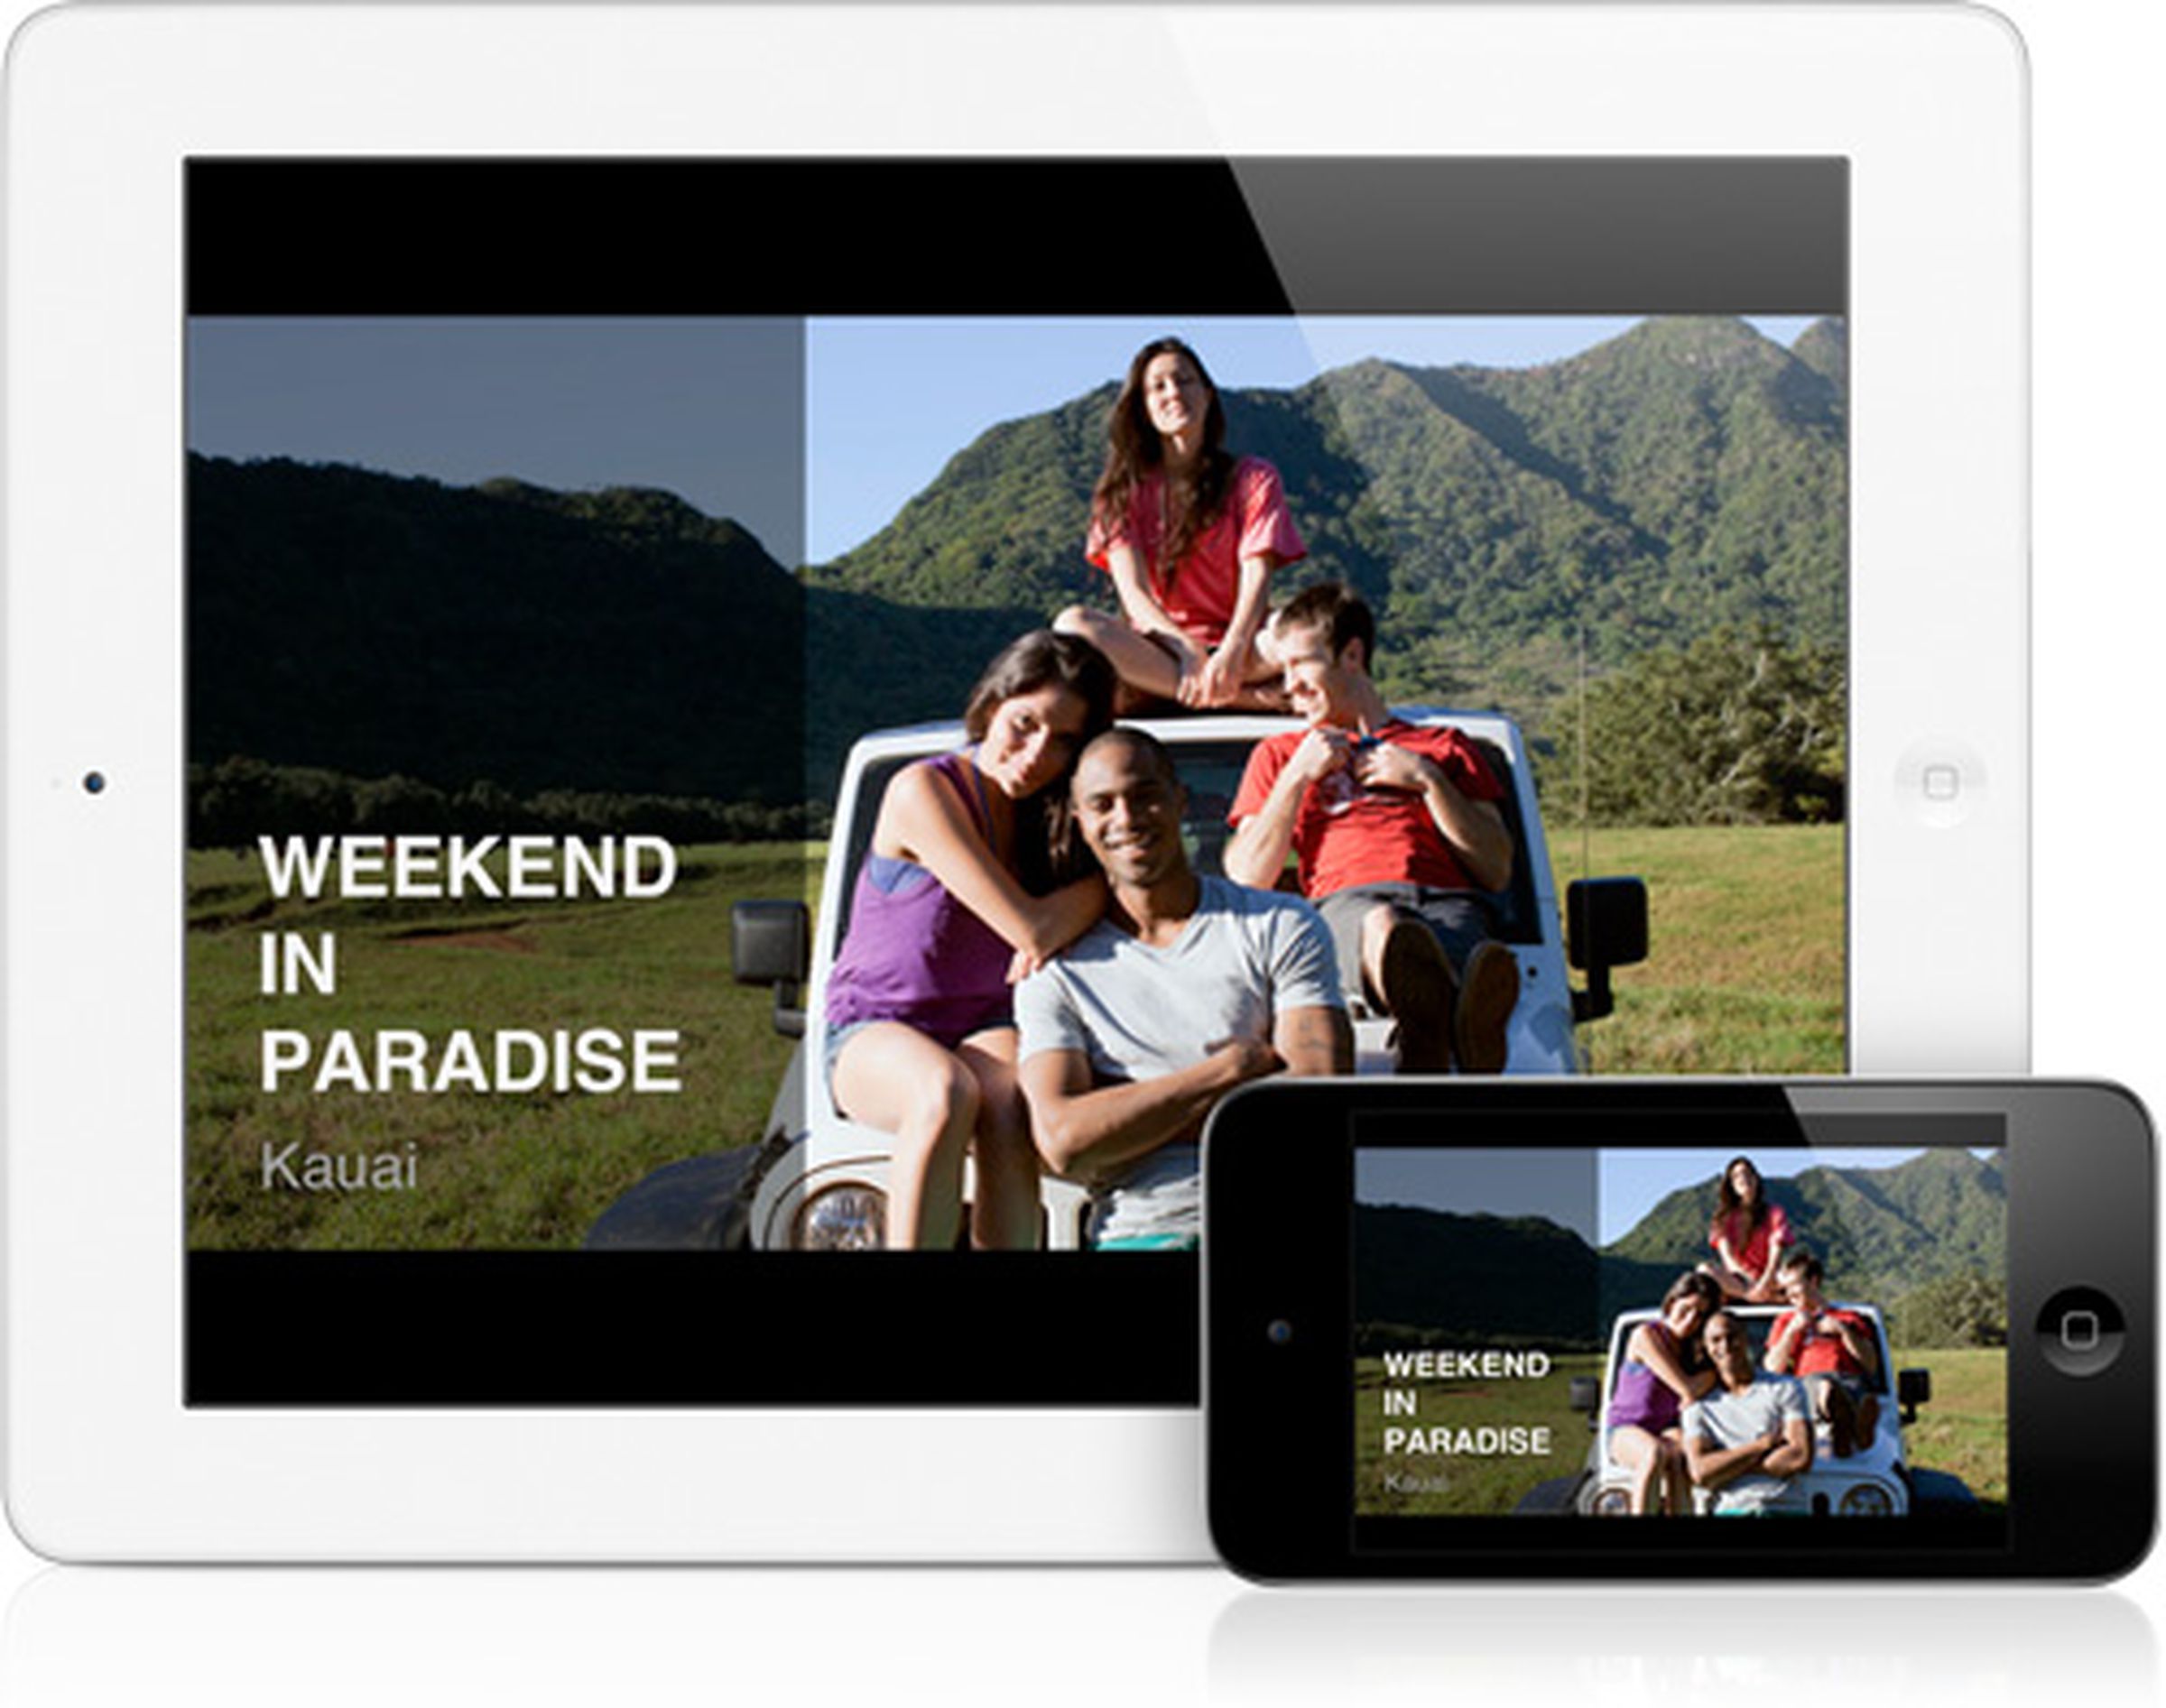 New iMovie for iPad & iPhone press photos